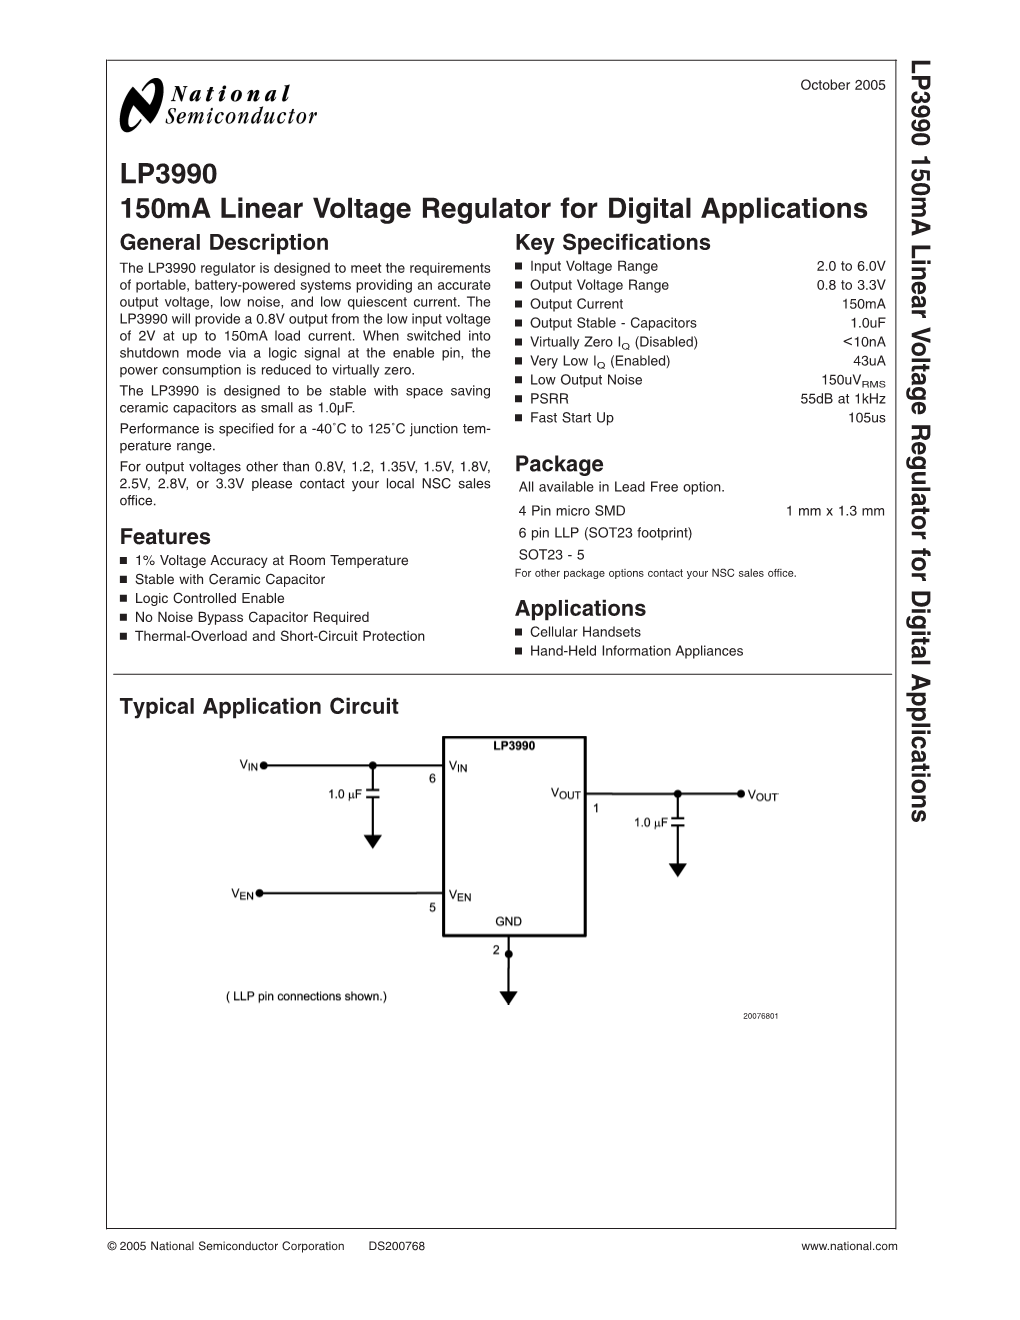 LP3990 150Ma Linear Voltage Regulator for Digital Applications